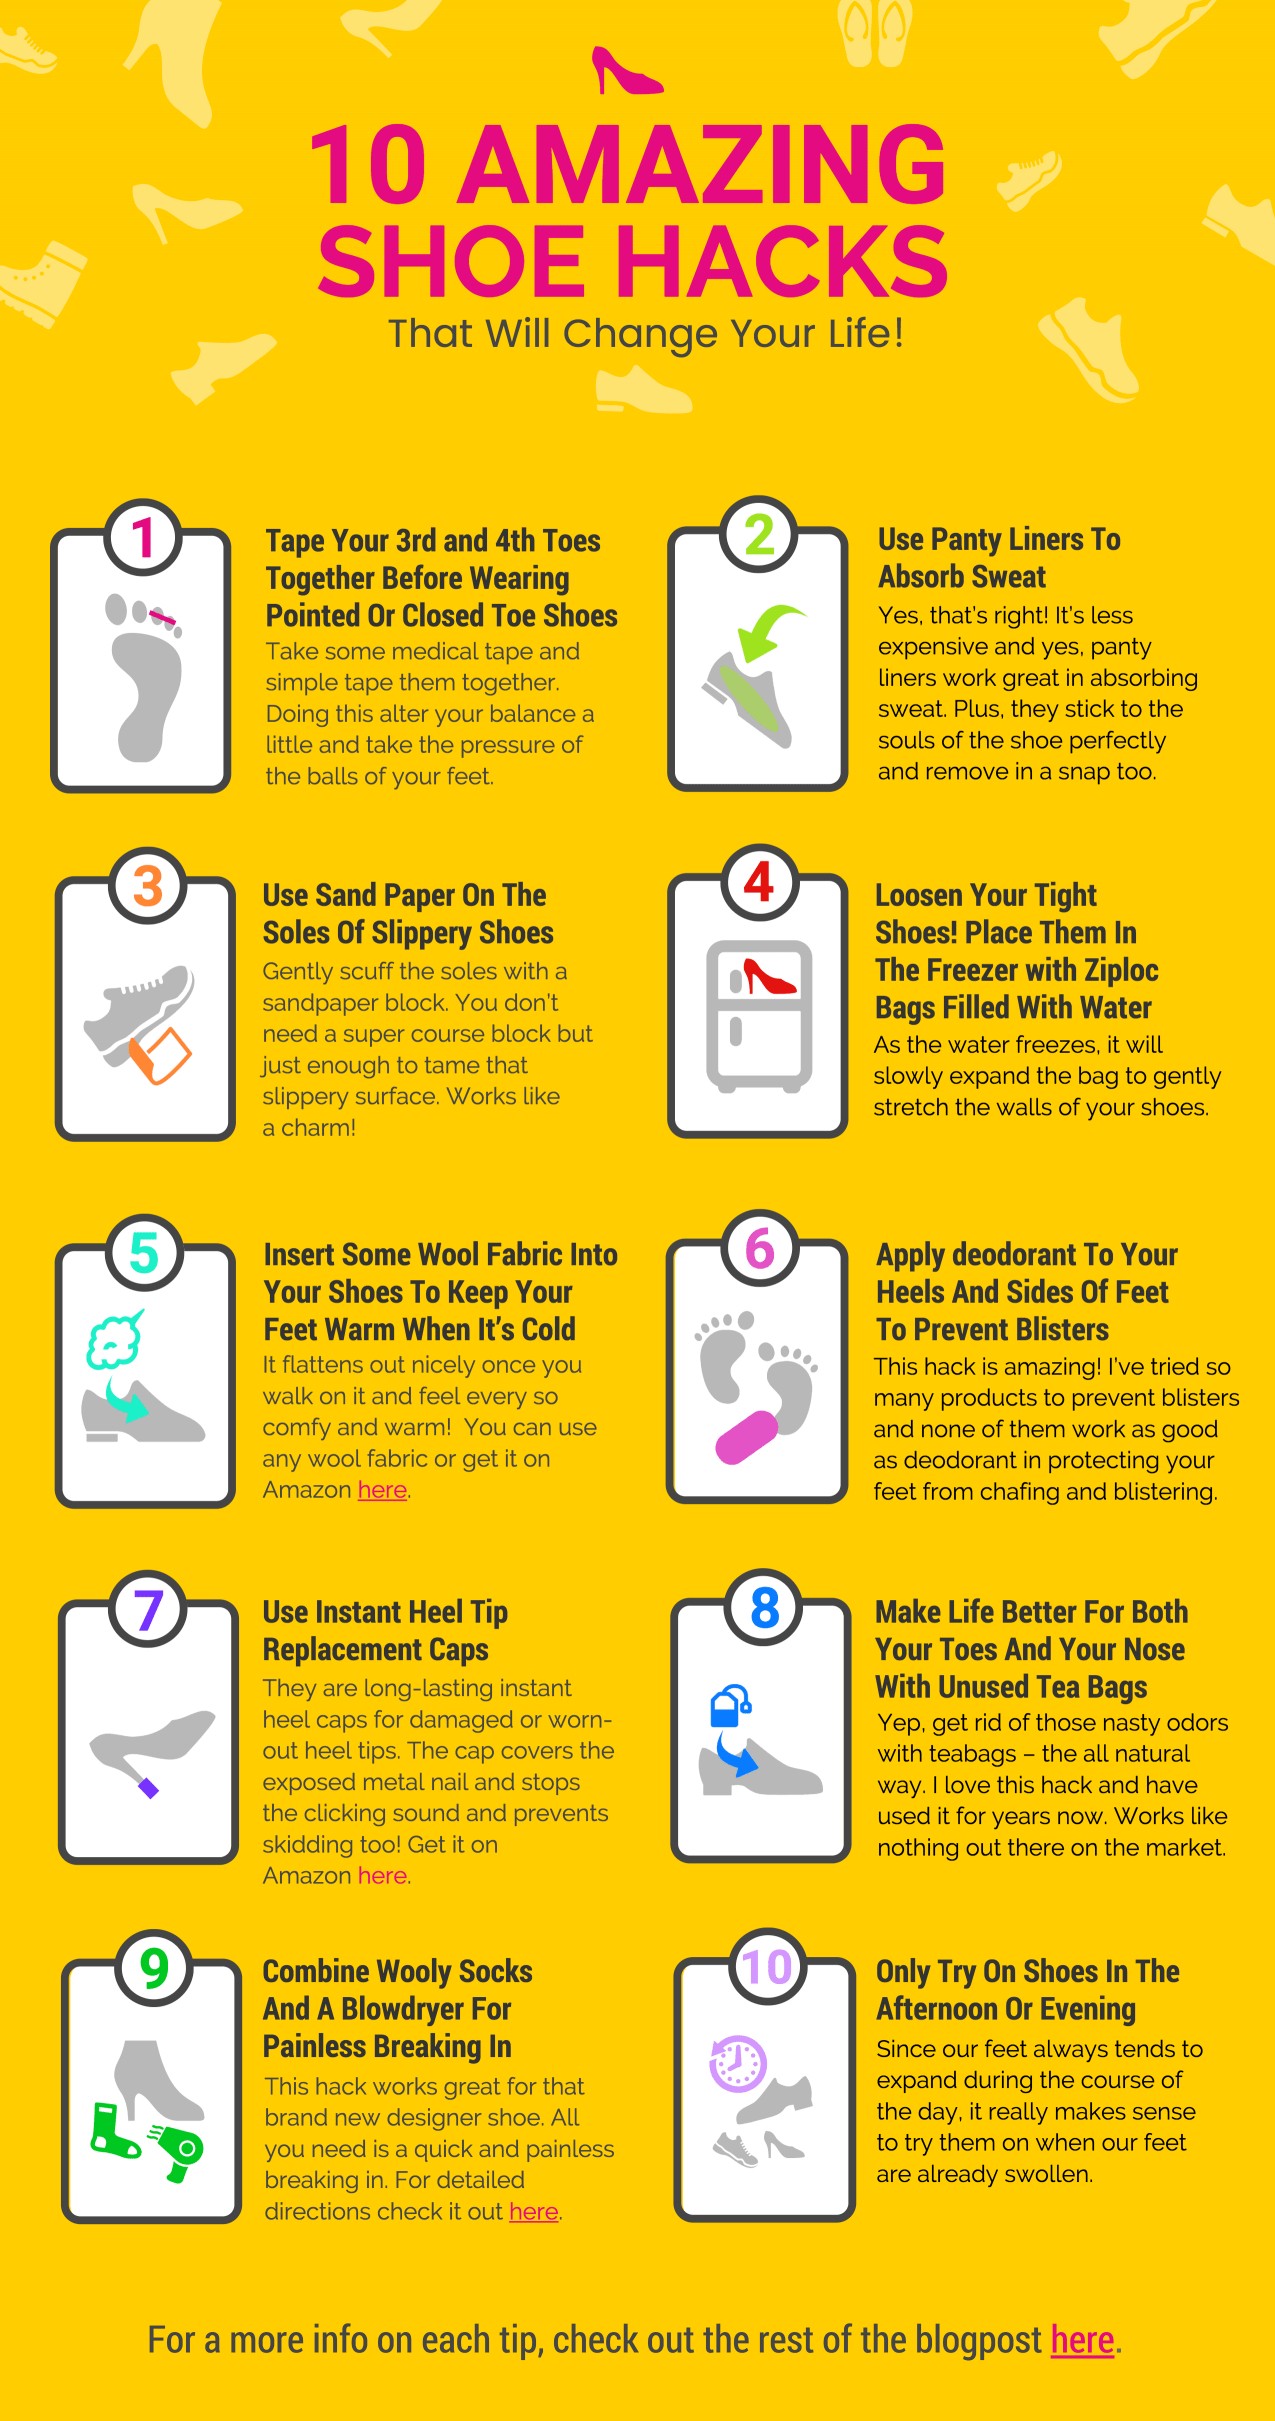 10 Amazing Shoe Hacks That Will Change Your Life